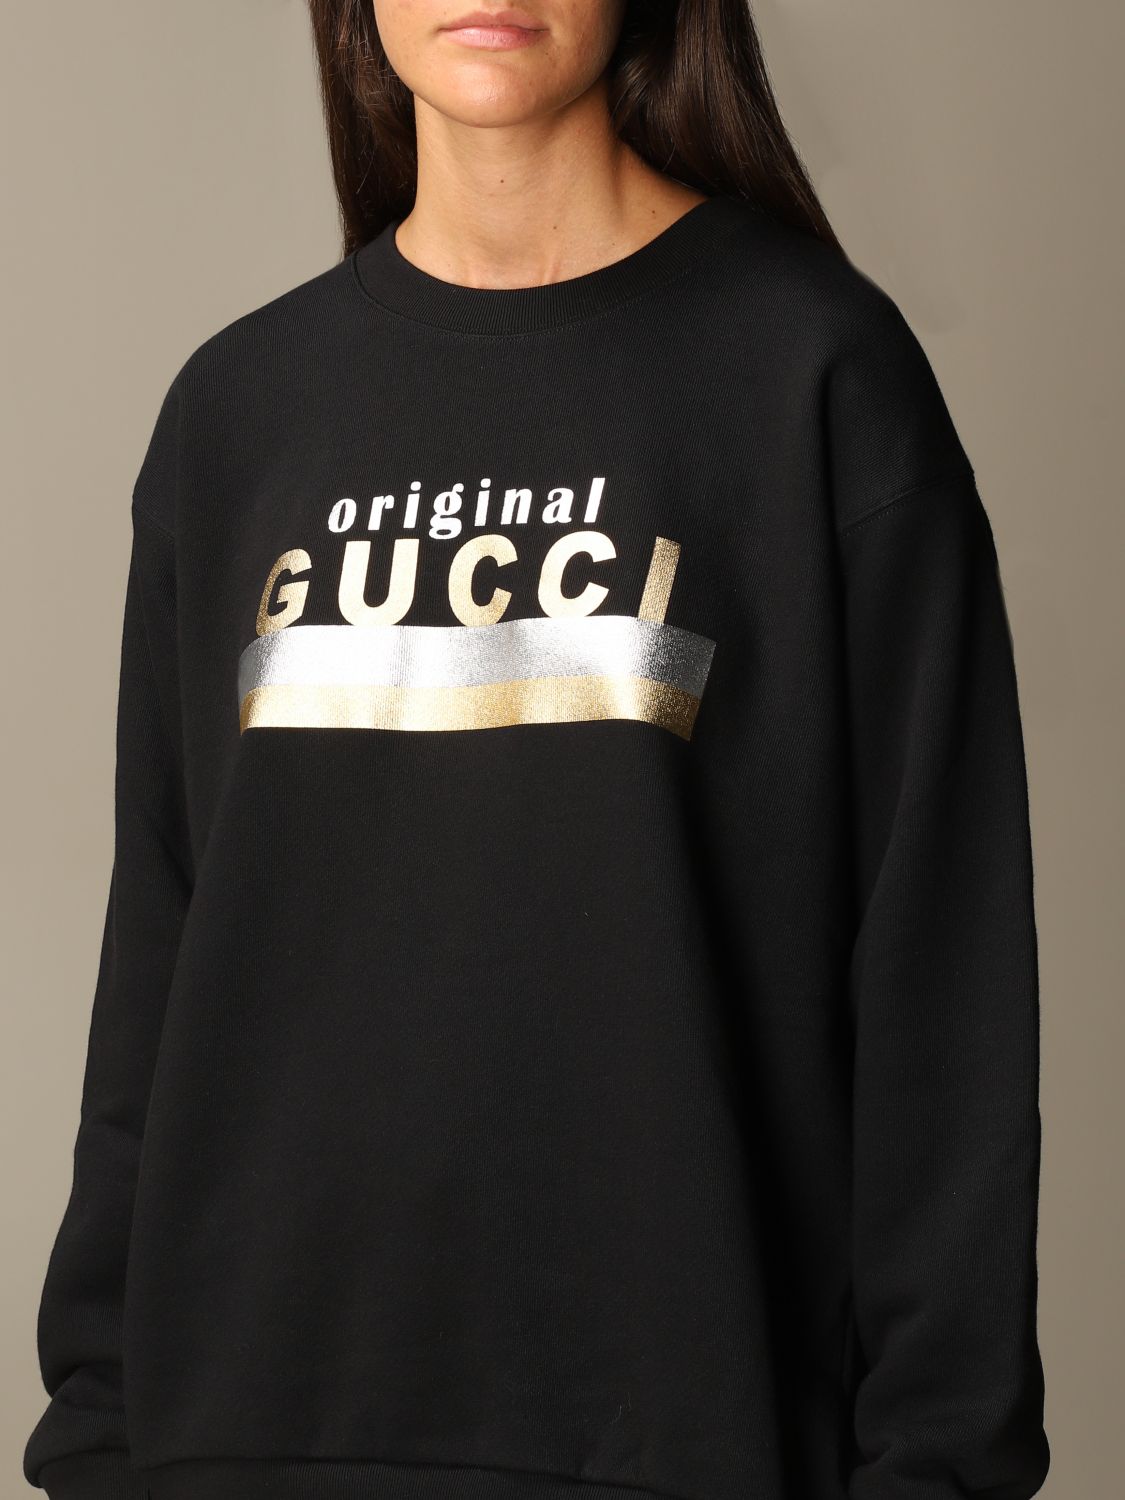 gucci sweatshirt womens